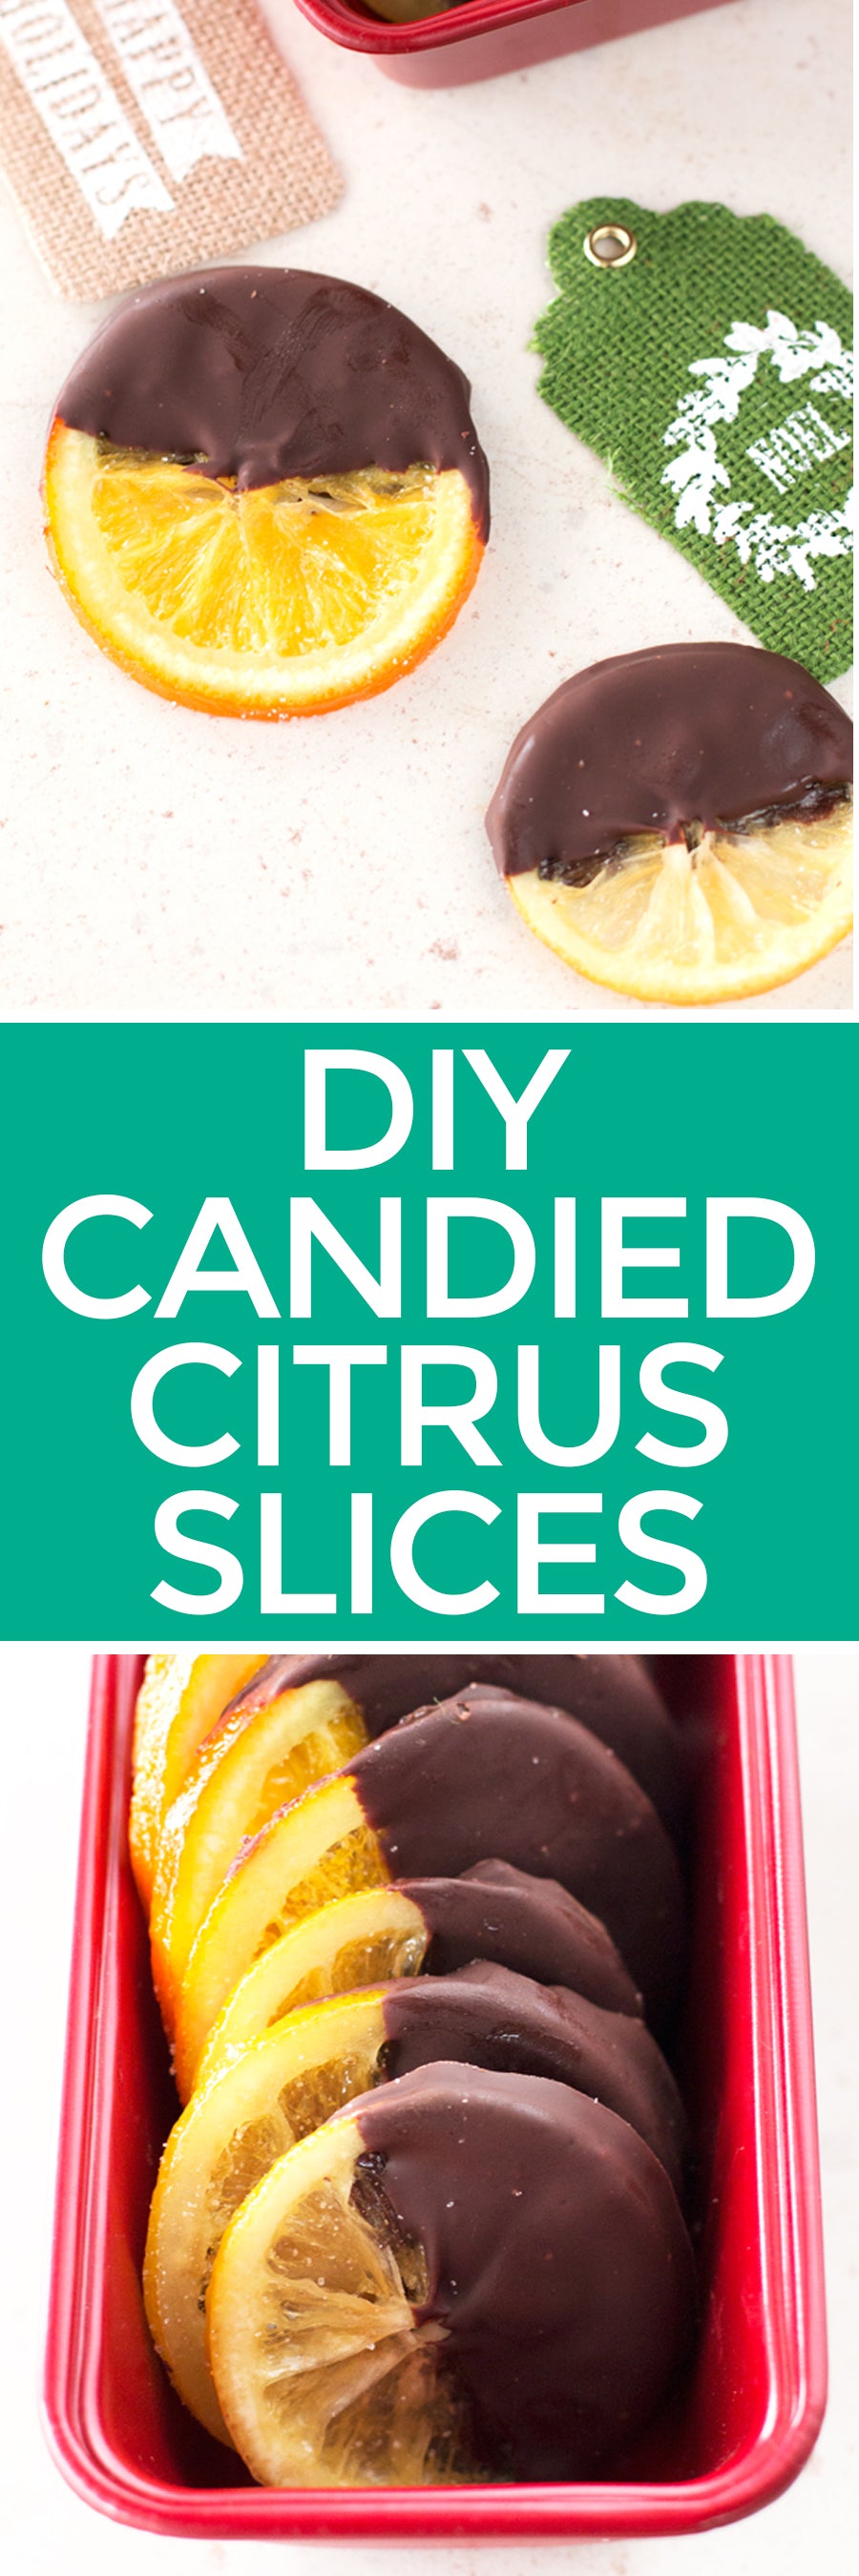 DIY Candied Citrus Slices | pigofthemonth.com